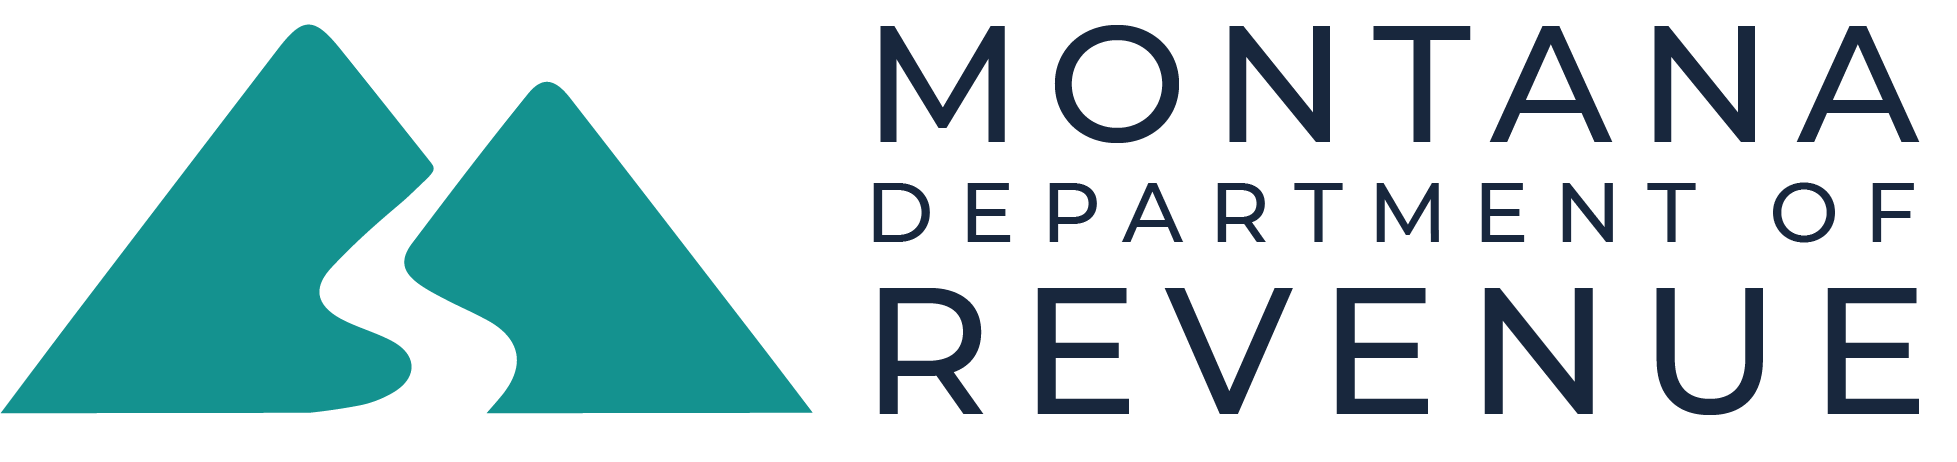 montana-department-of-revenue